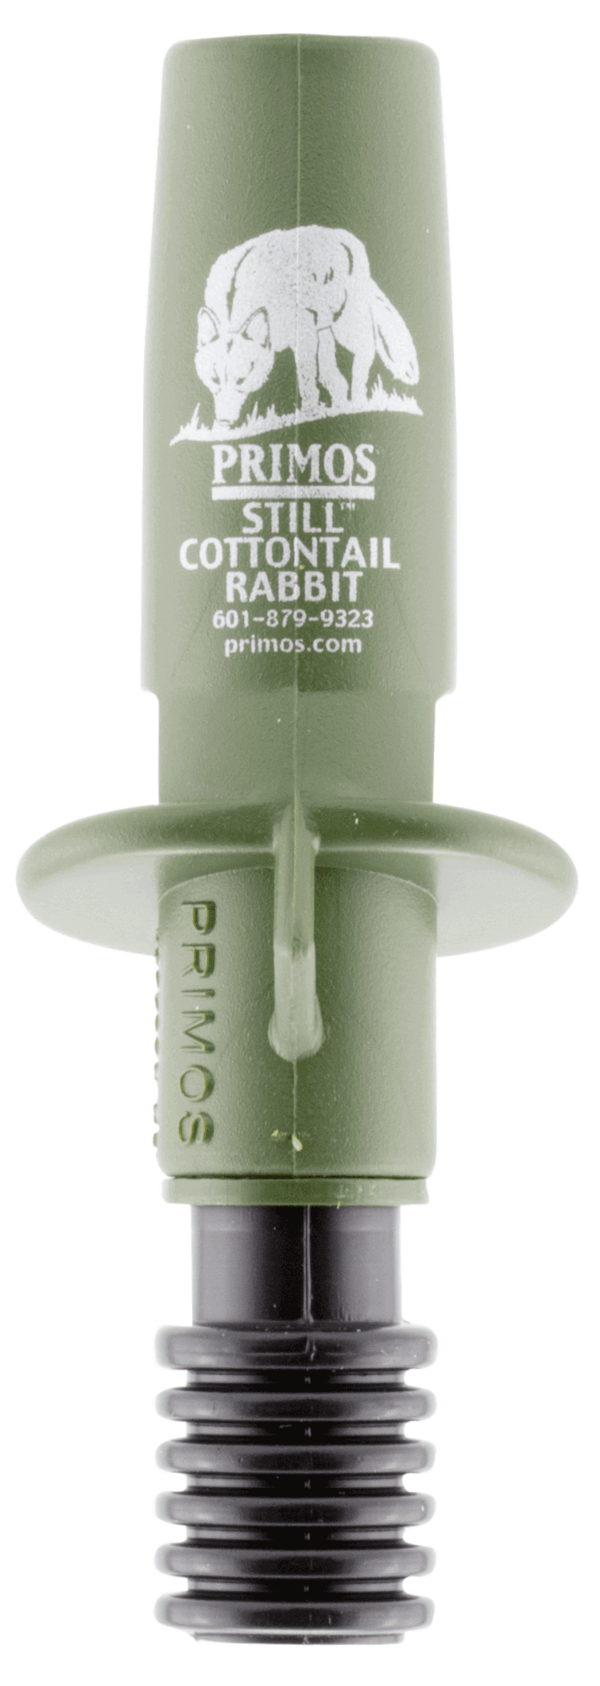 Primos 316 Still Cottontail Rabbit Open Call Rabbit Sounds Attracts Predators Green